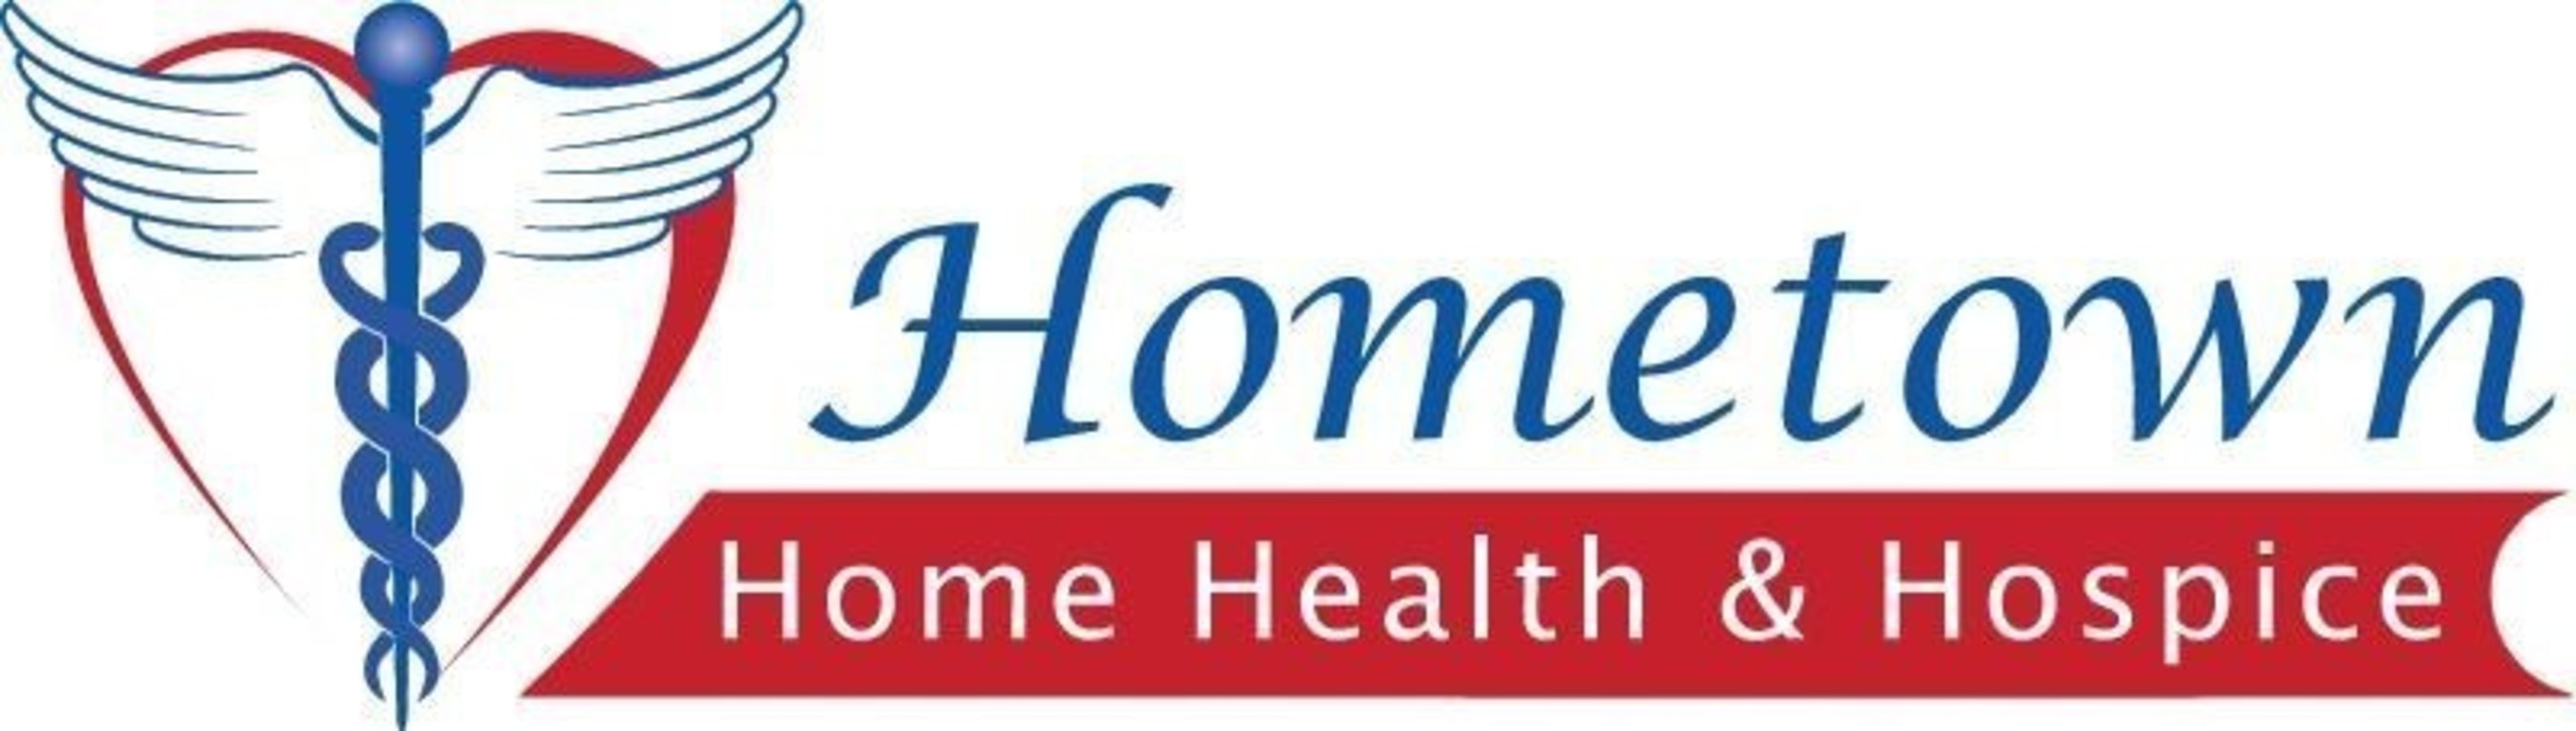 Hometown Home Health & Hospice: www.hometownhhh.com